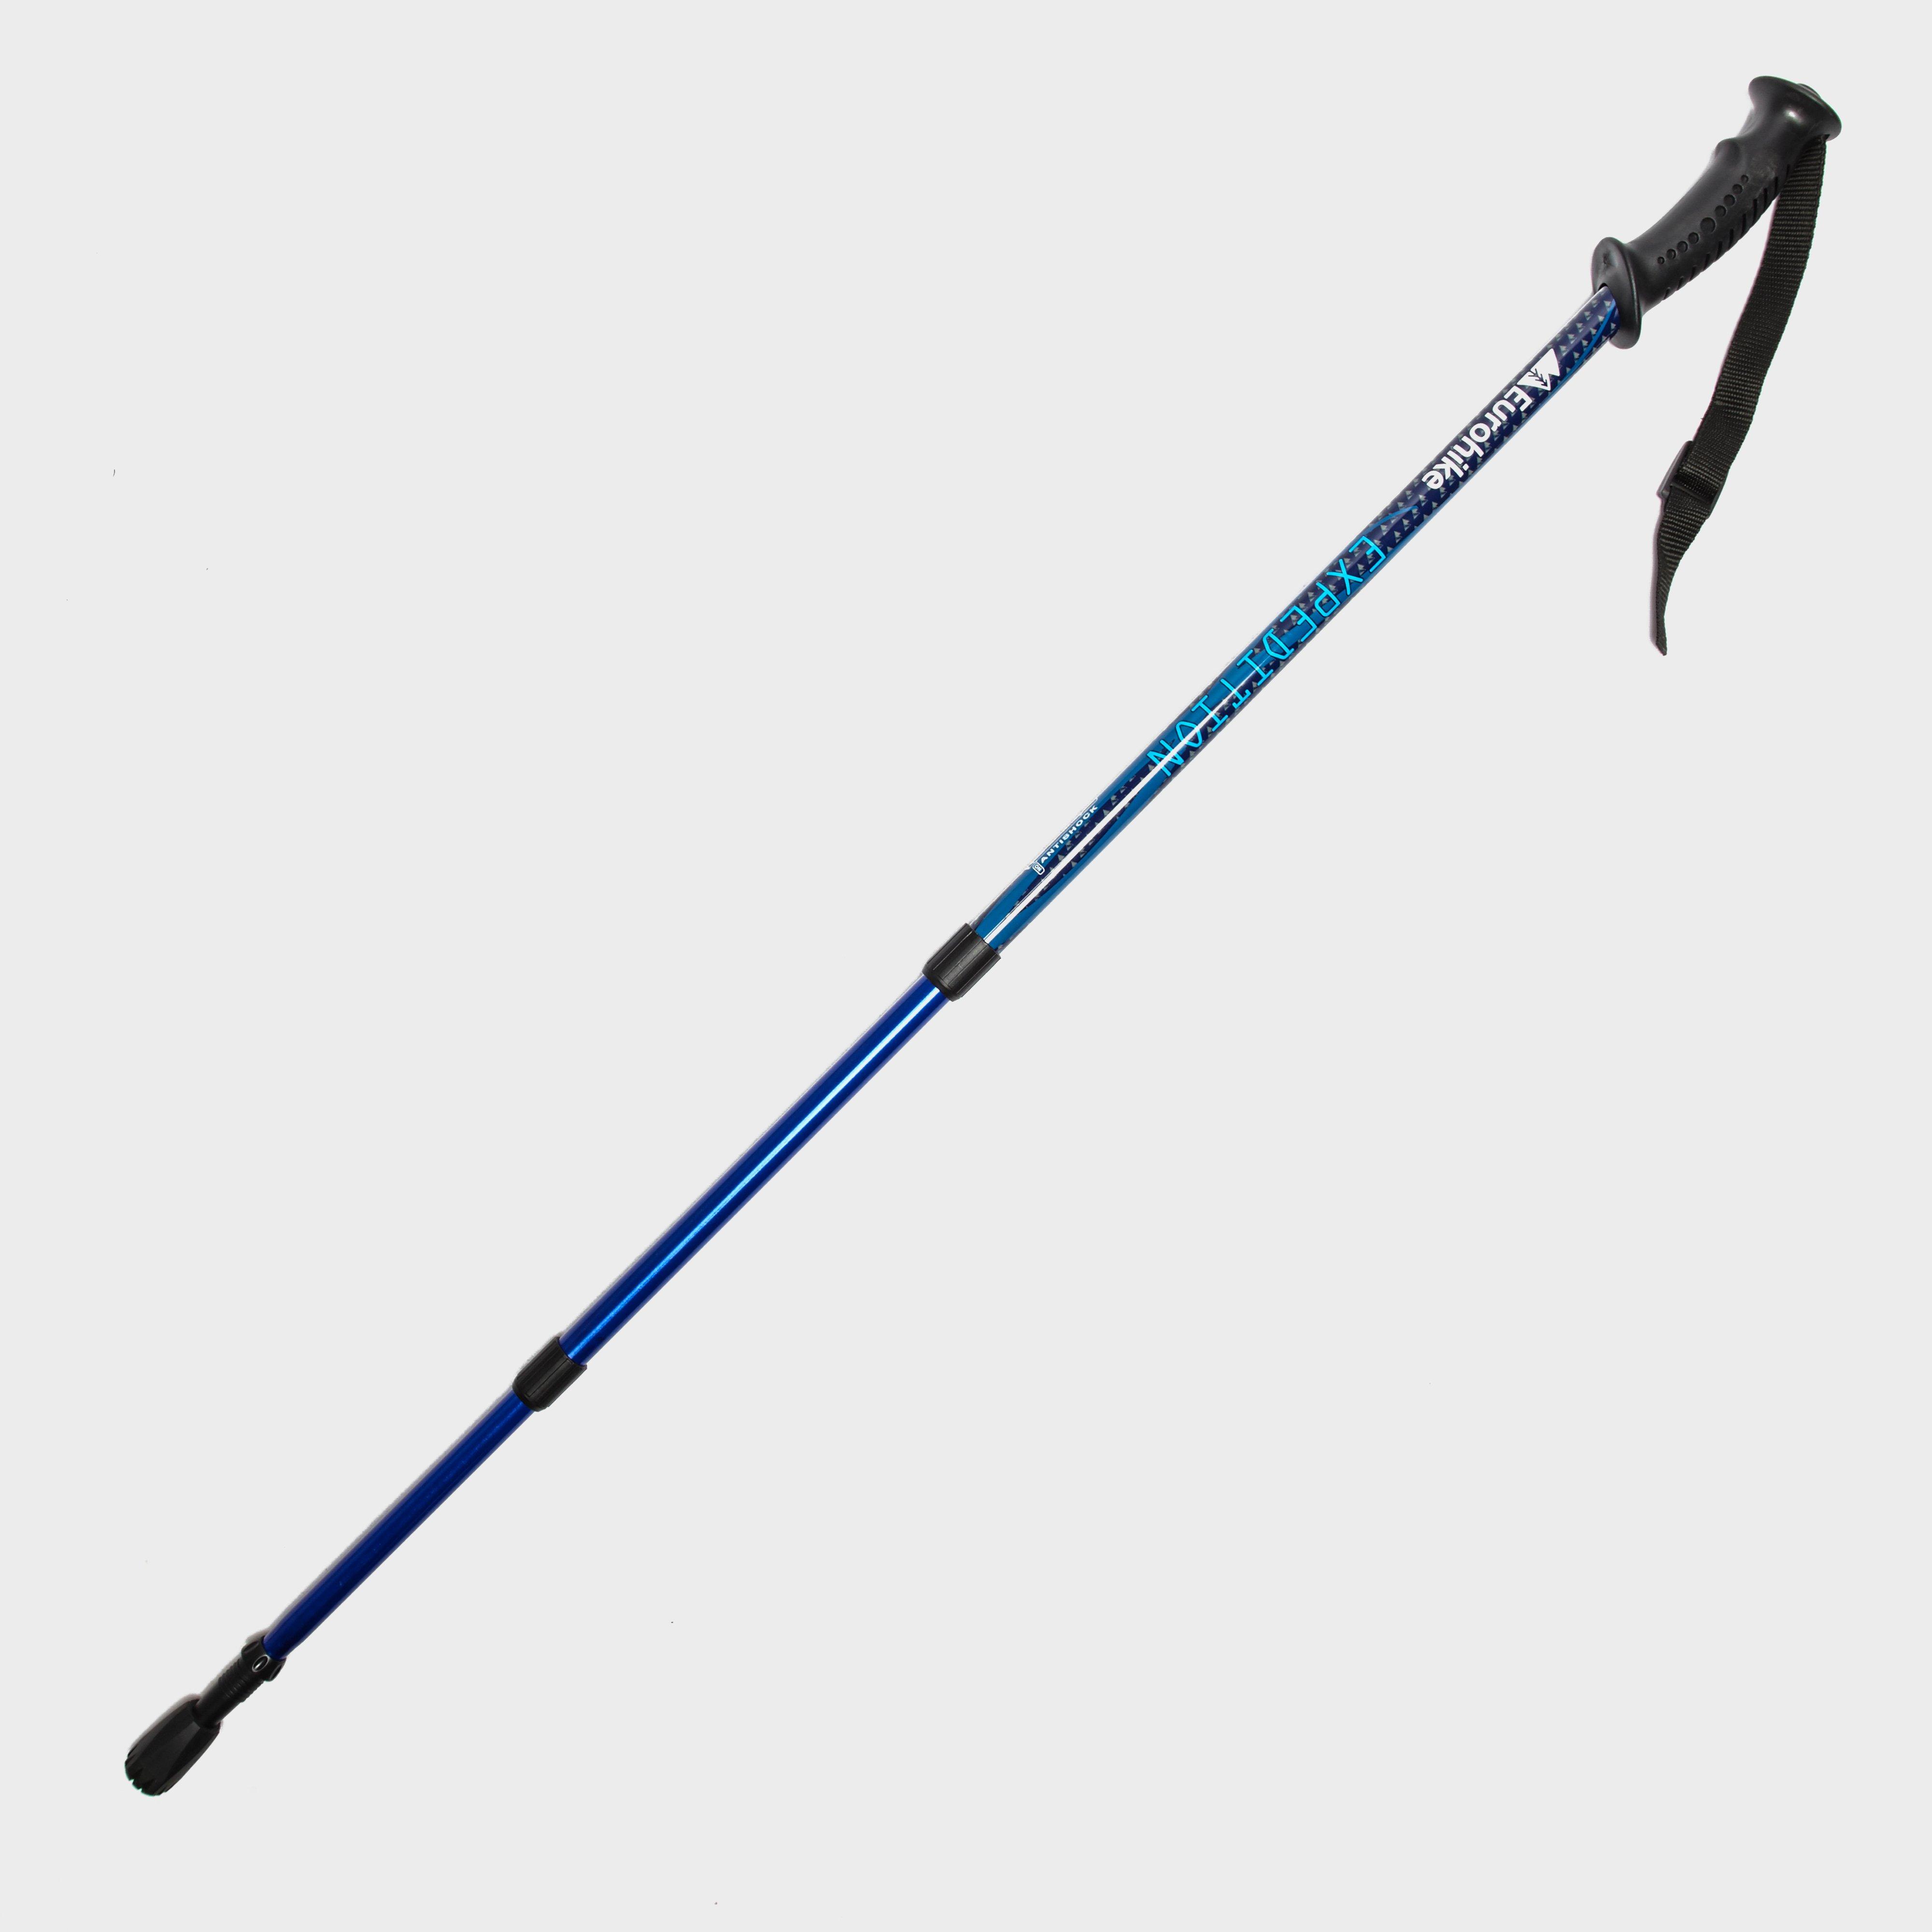 Image of Eurohike Expedition Anti-Shock Walking Pole - Blue/Pole, Blue/POLE